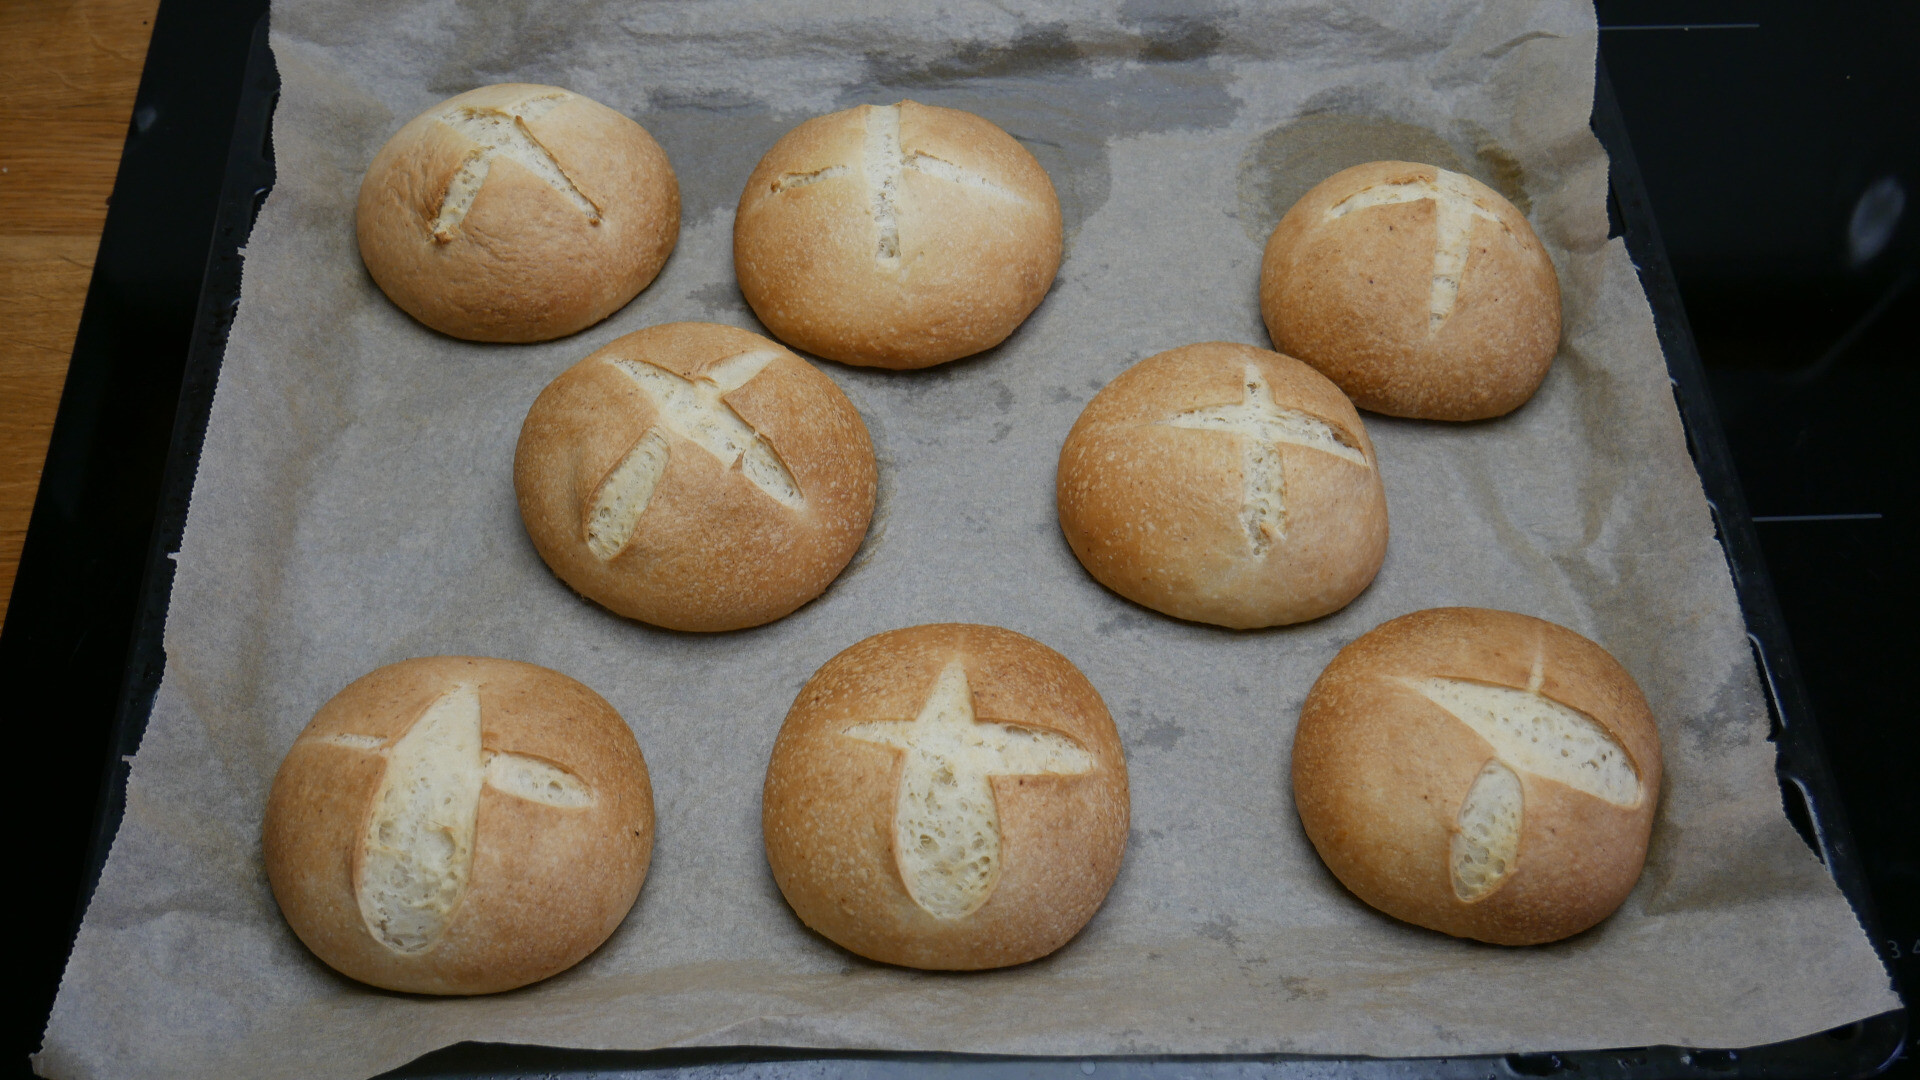 baked bread rolls on a baking tray